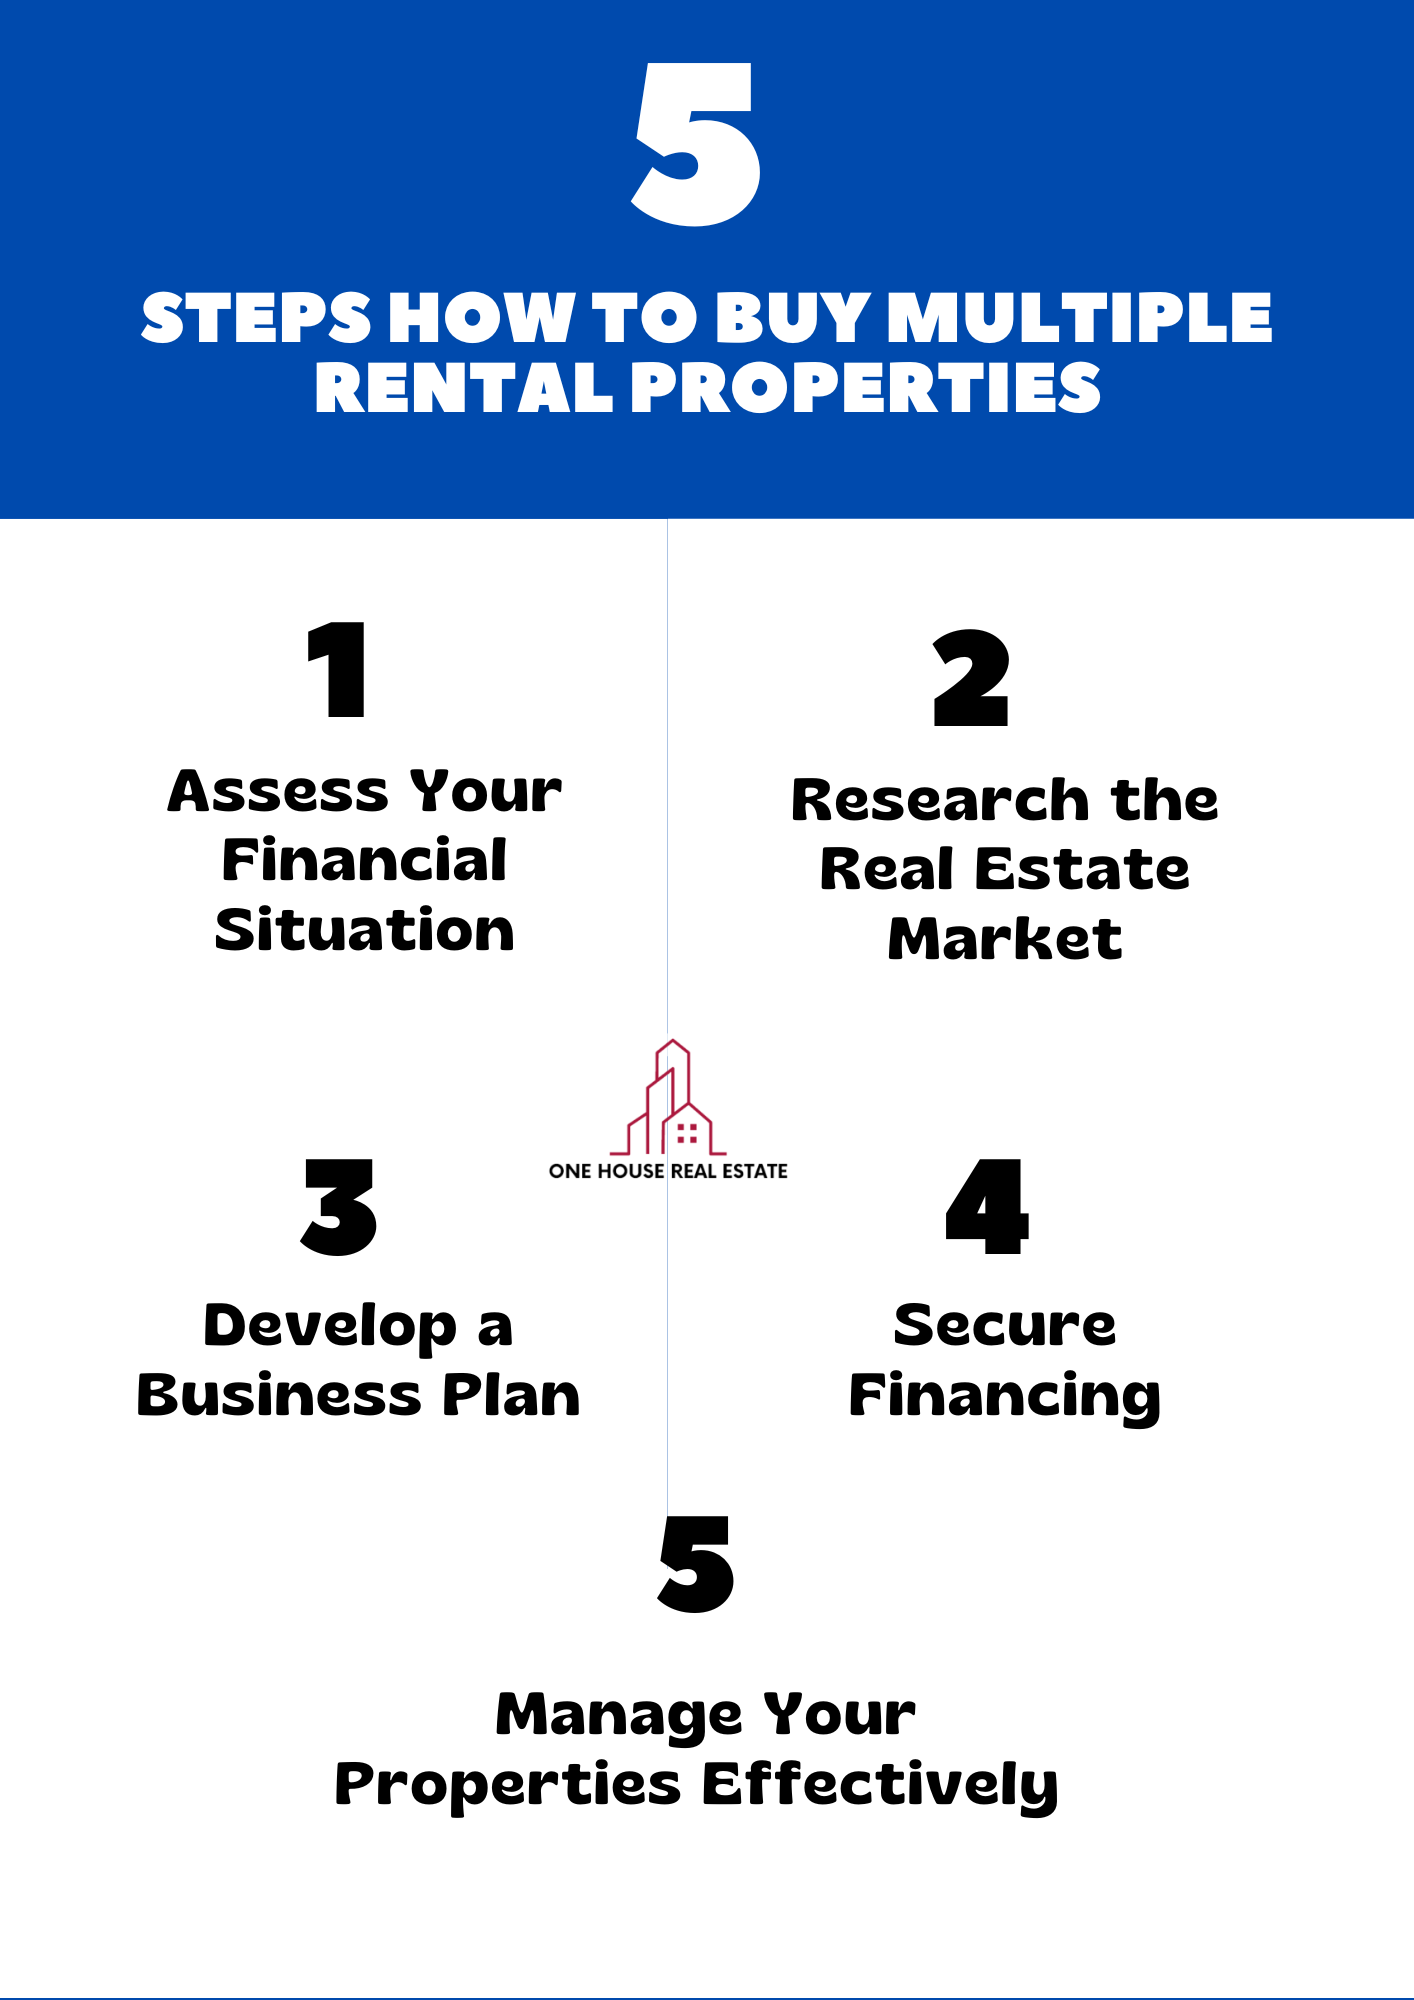 How to Buy Multiple Rental Properties